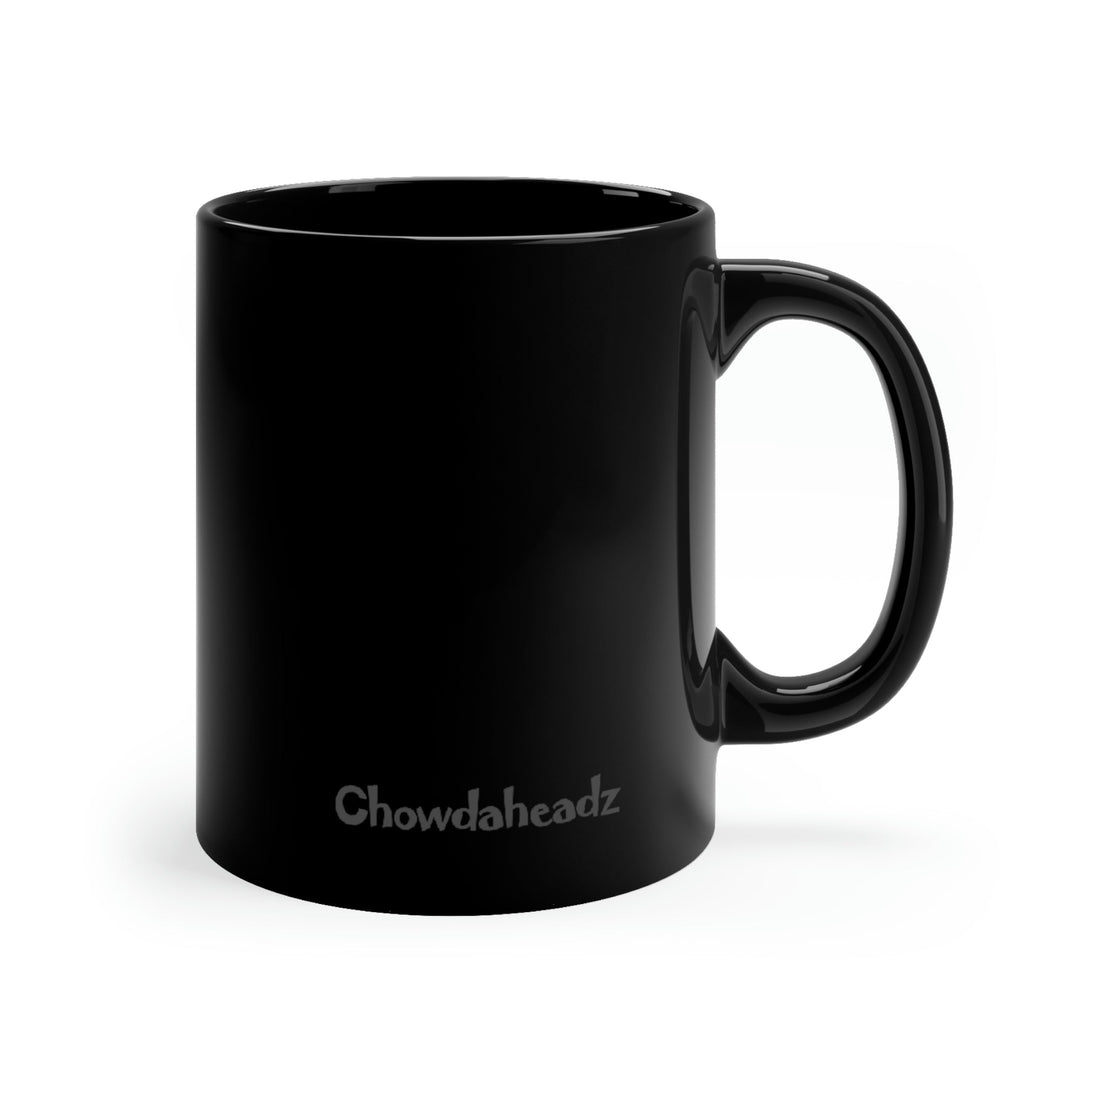 Heartsachusetts 11oz Coffee Mug - Chowdaheadz